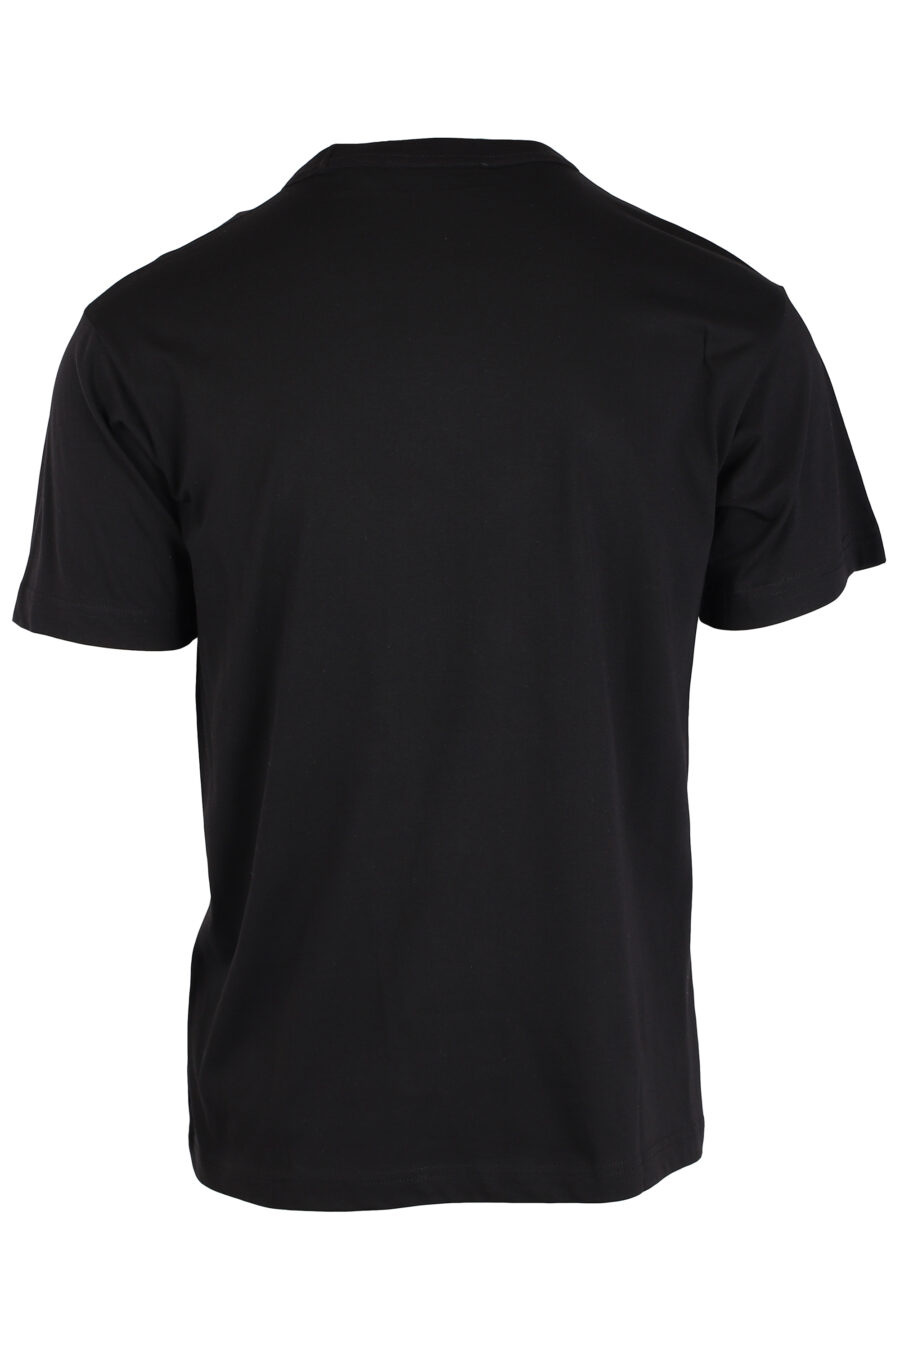 T-shirt preta com logótipo redondo branco - IMG 4008